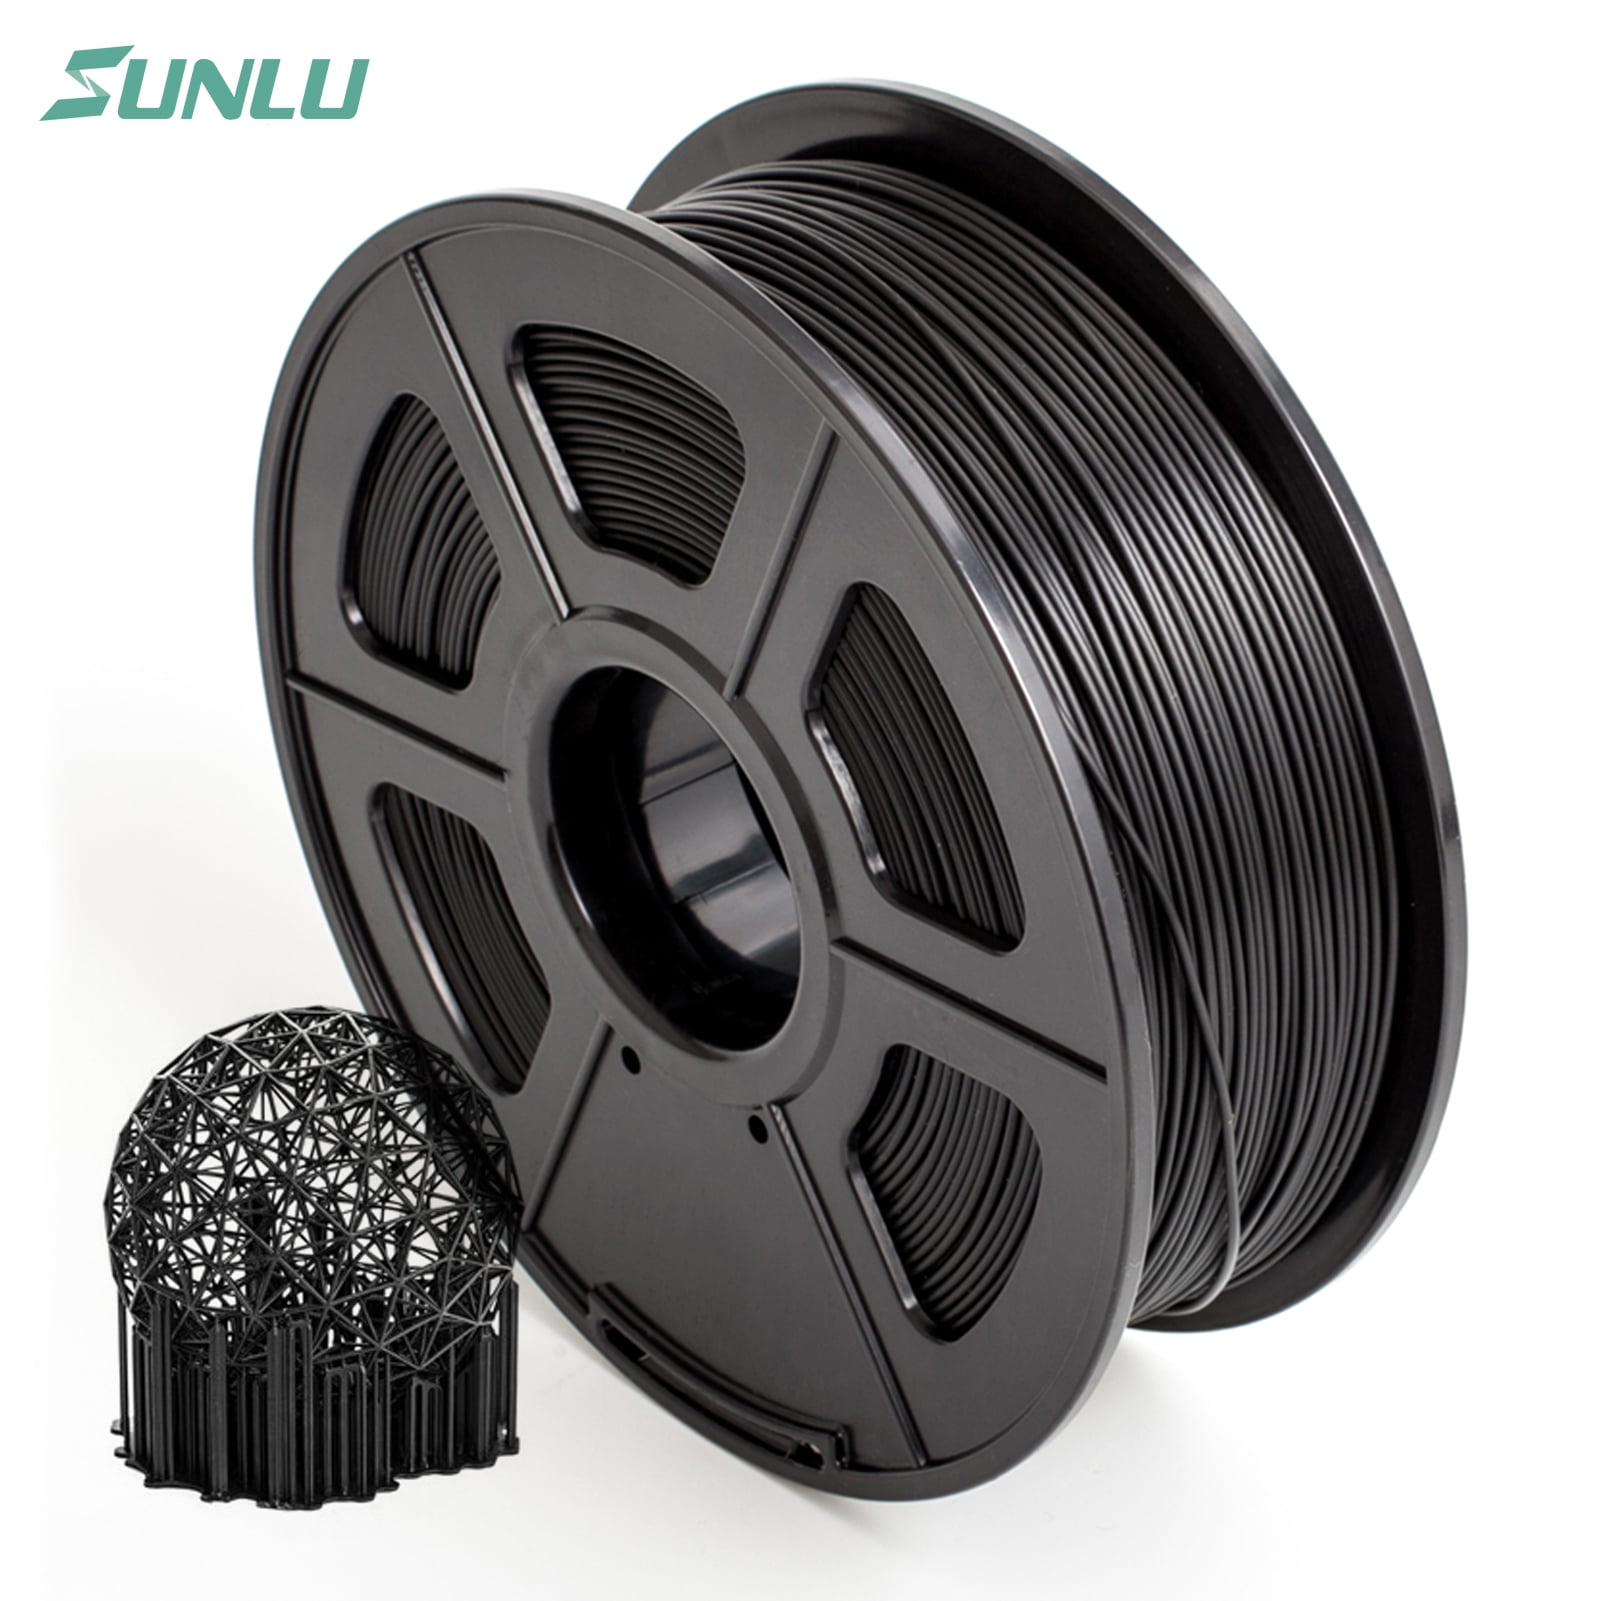 Dimensional Accuracy of +/- 0.02mm PLA Black SUNLU PLA Filament 1.75mm 3D Printer Filament PLA Tangle-Free 1kg Spool 2.2lbs 